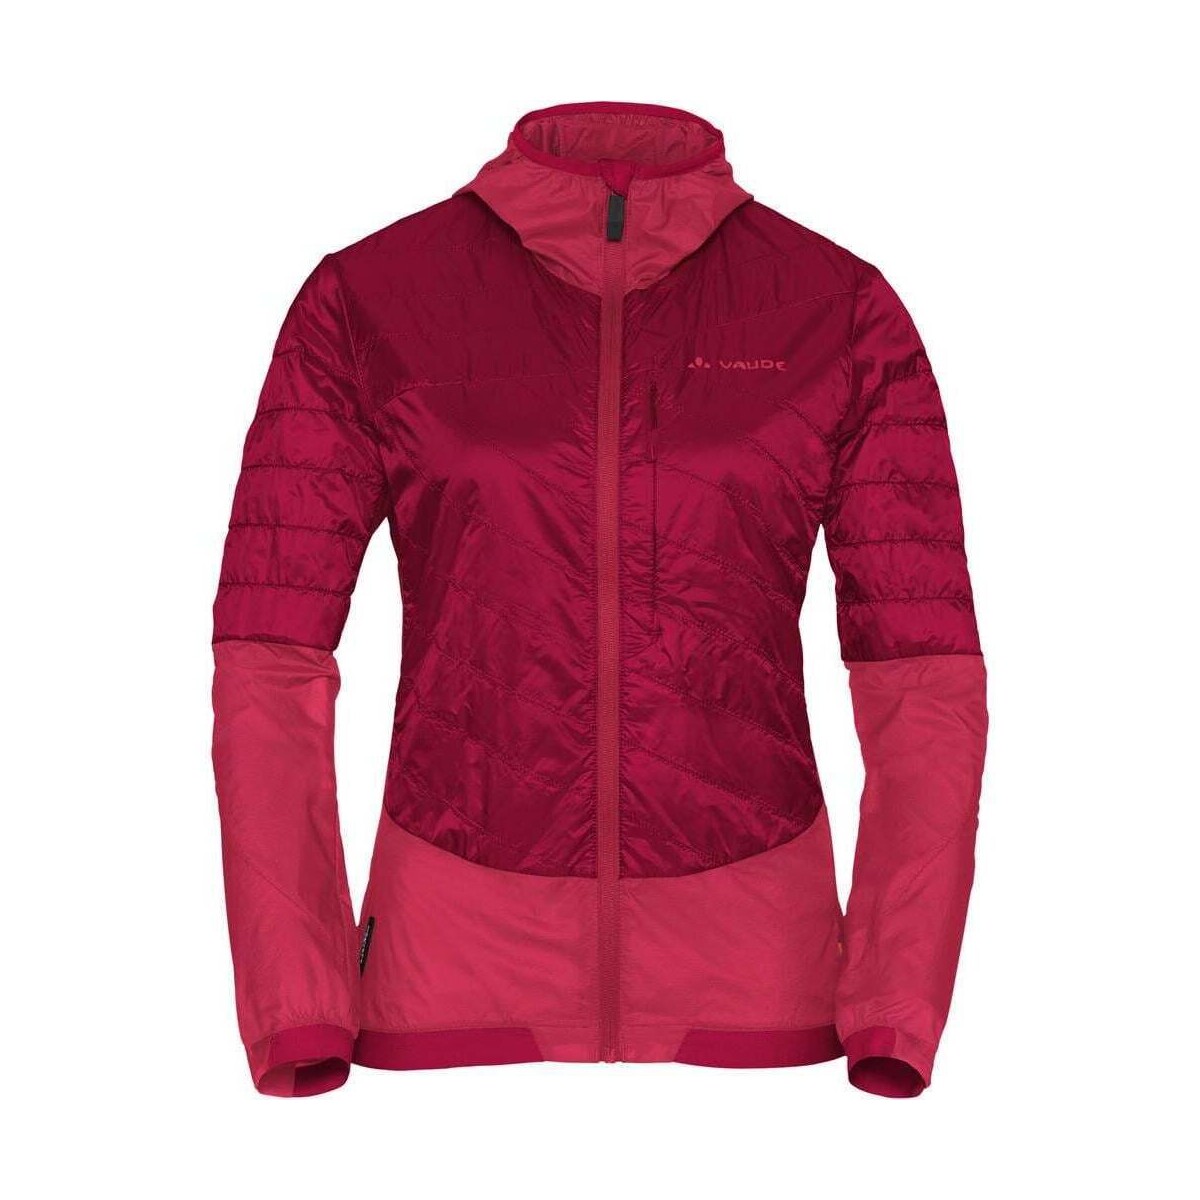 textil Mujer Chaquetas de deporte Vaude Womens Moab UL Hybrid Jacket Rosa